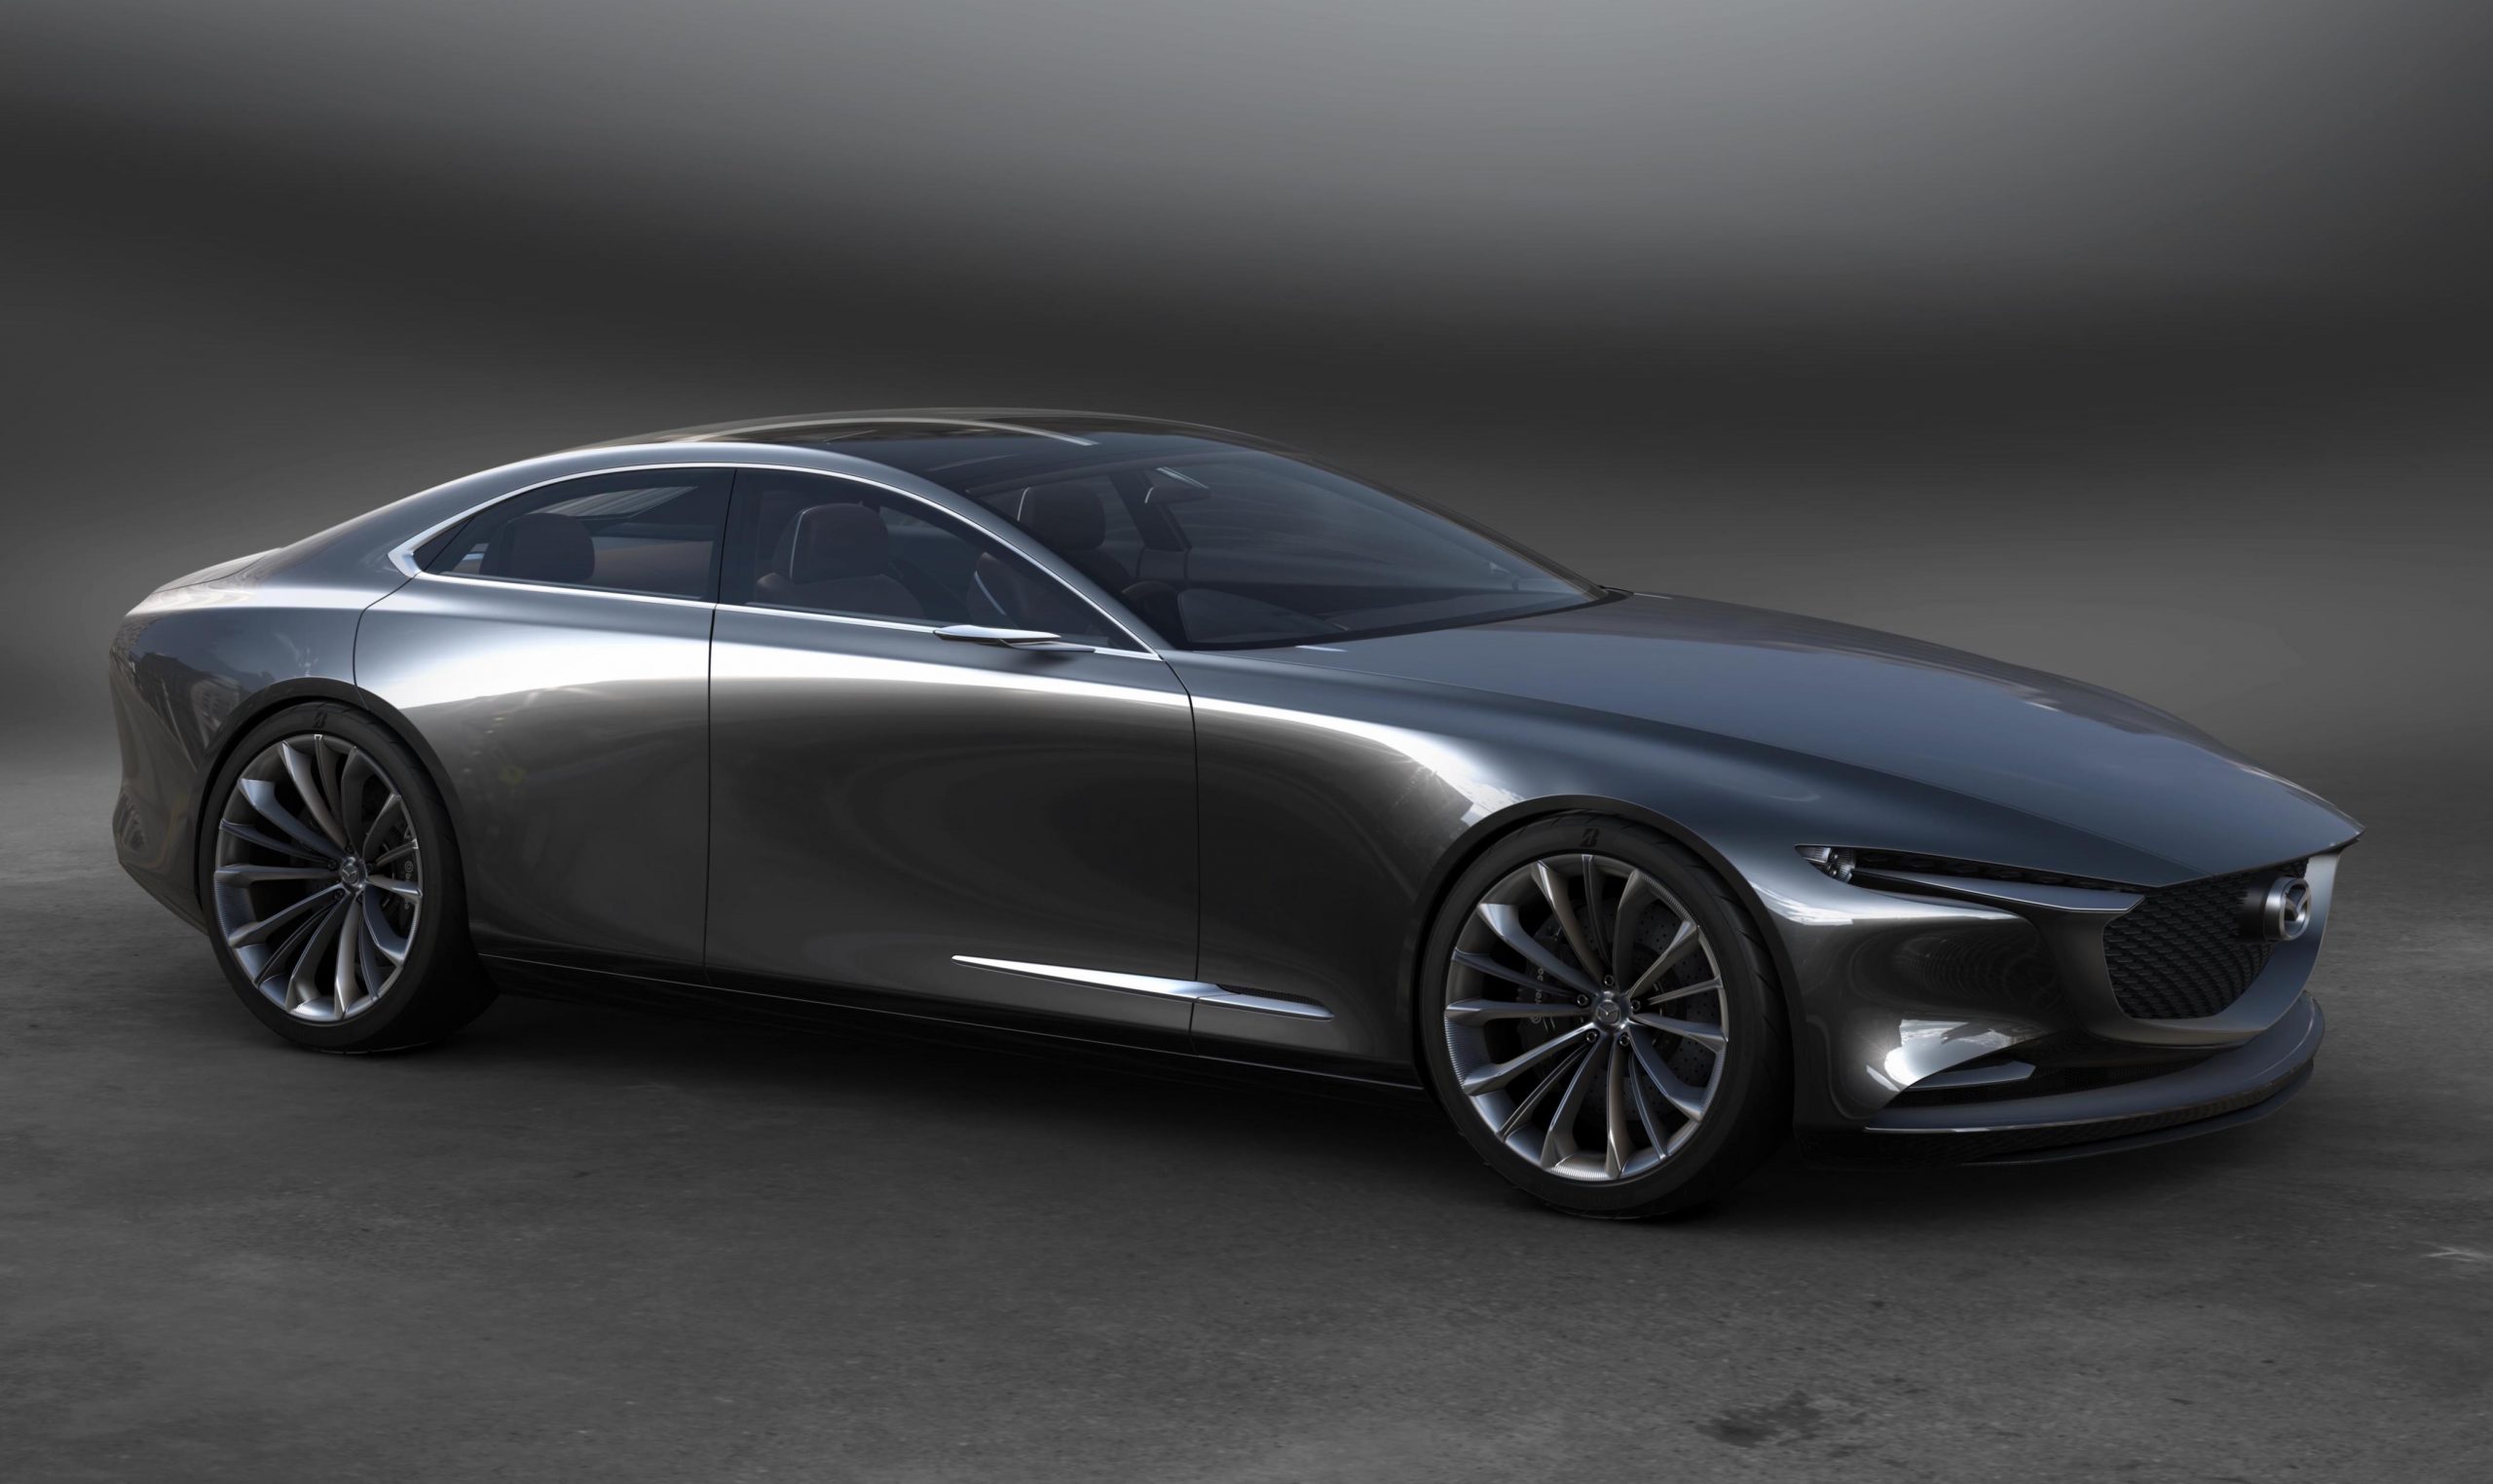 Mazda Vision Coupe concept revealed, previews next-gen Mazda6?